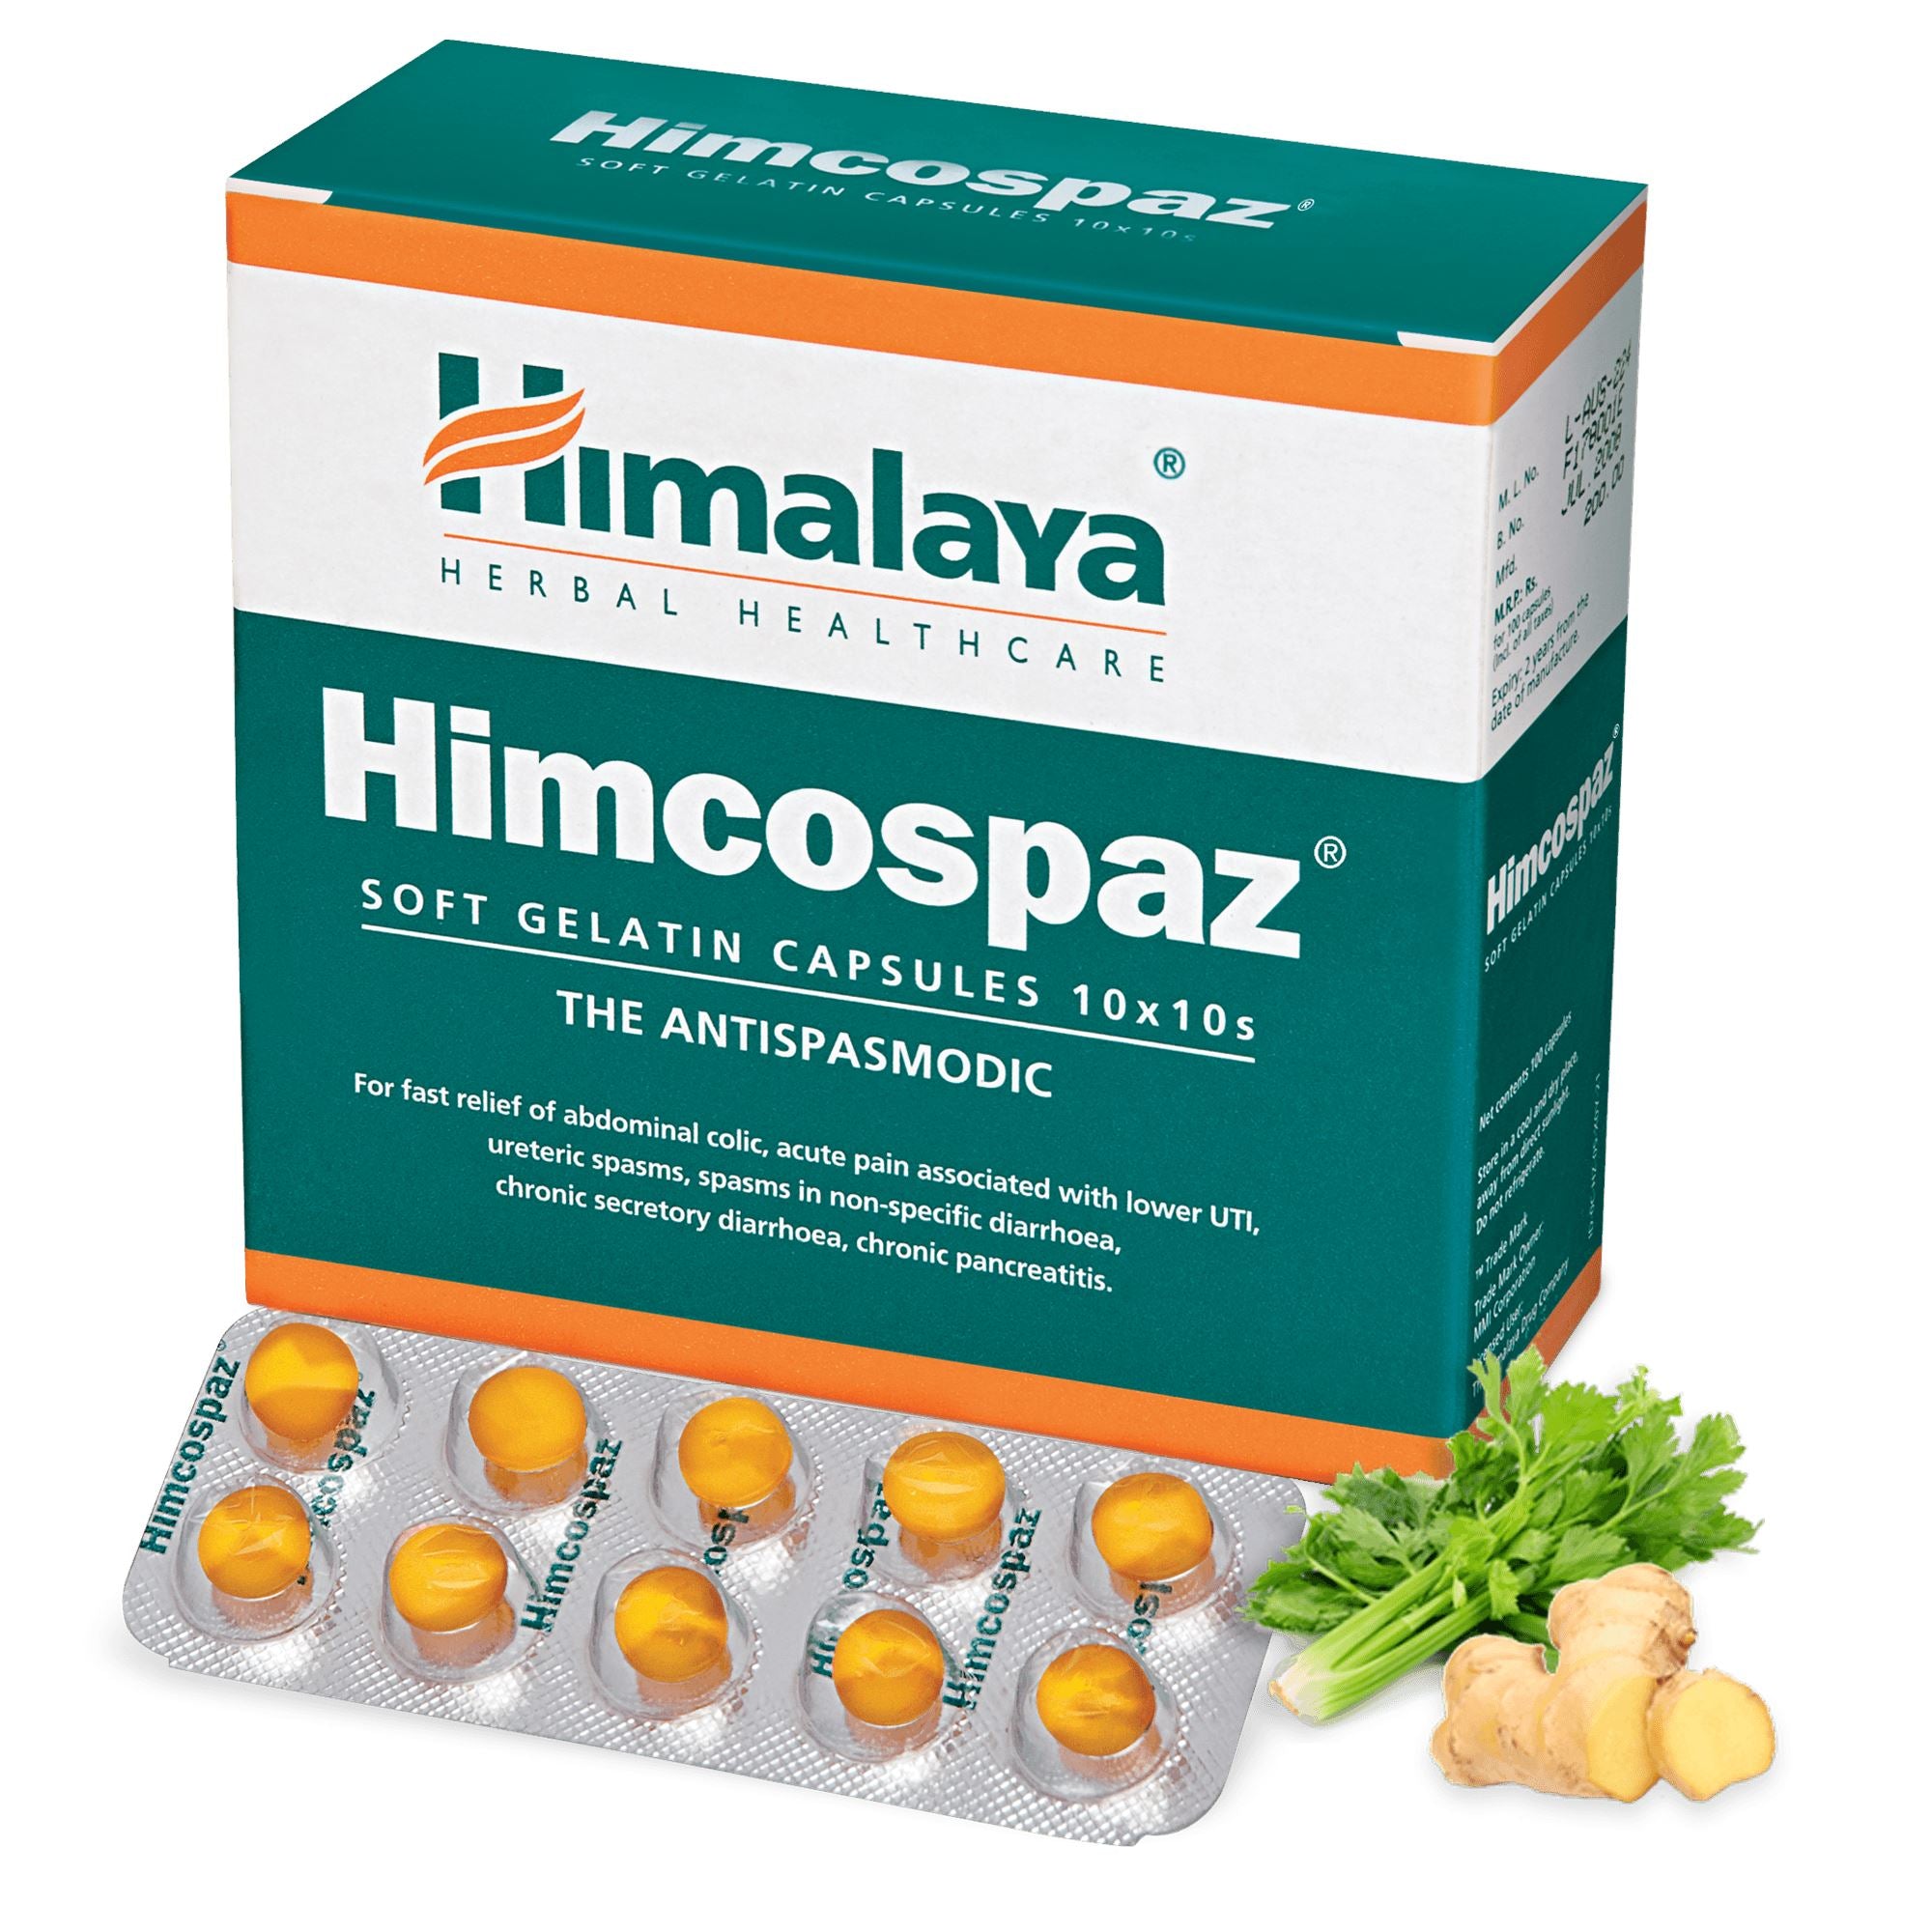 Himalaya Himcospaz - Controls diarrhea, dysentery, abdominal colic, and menstruation